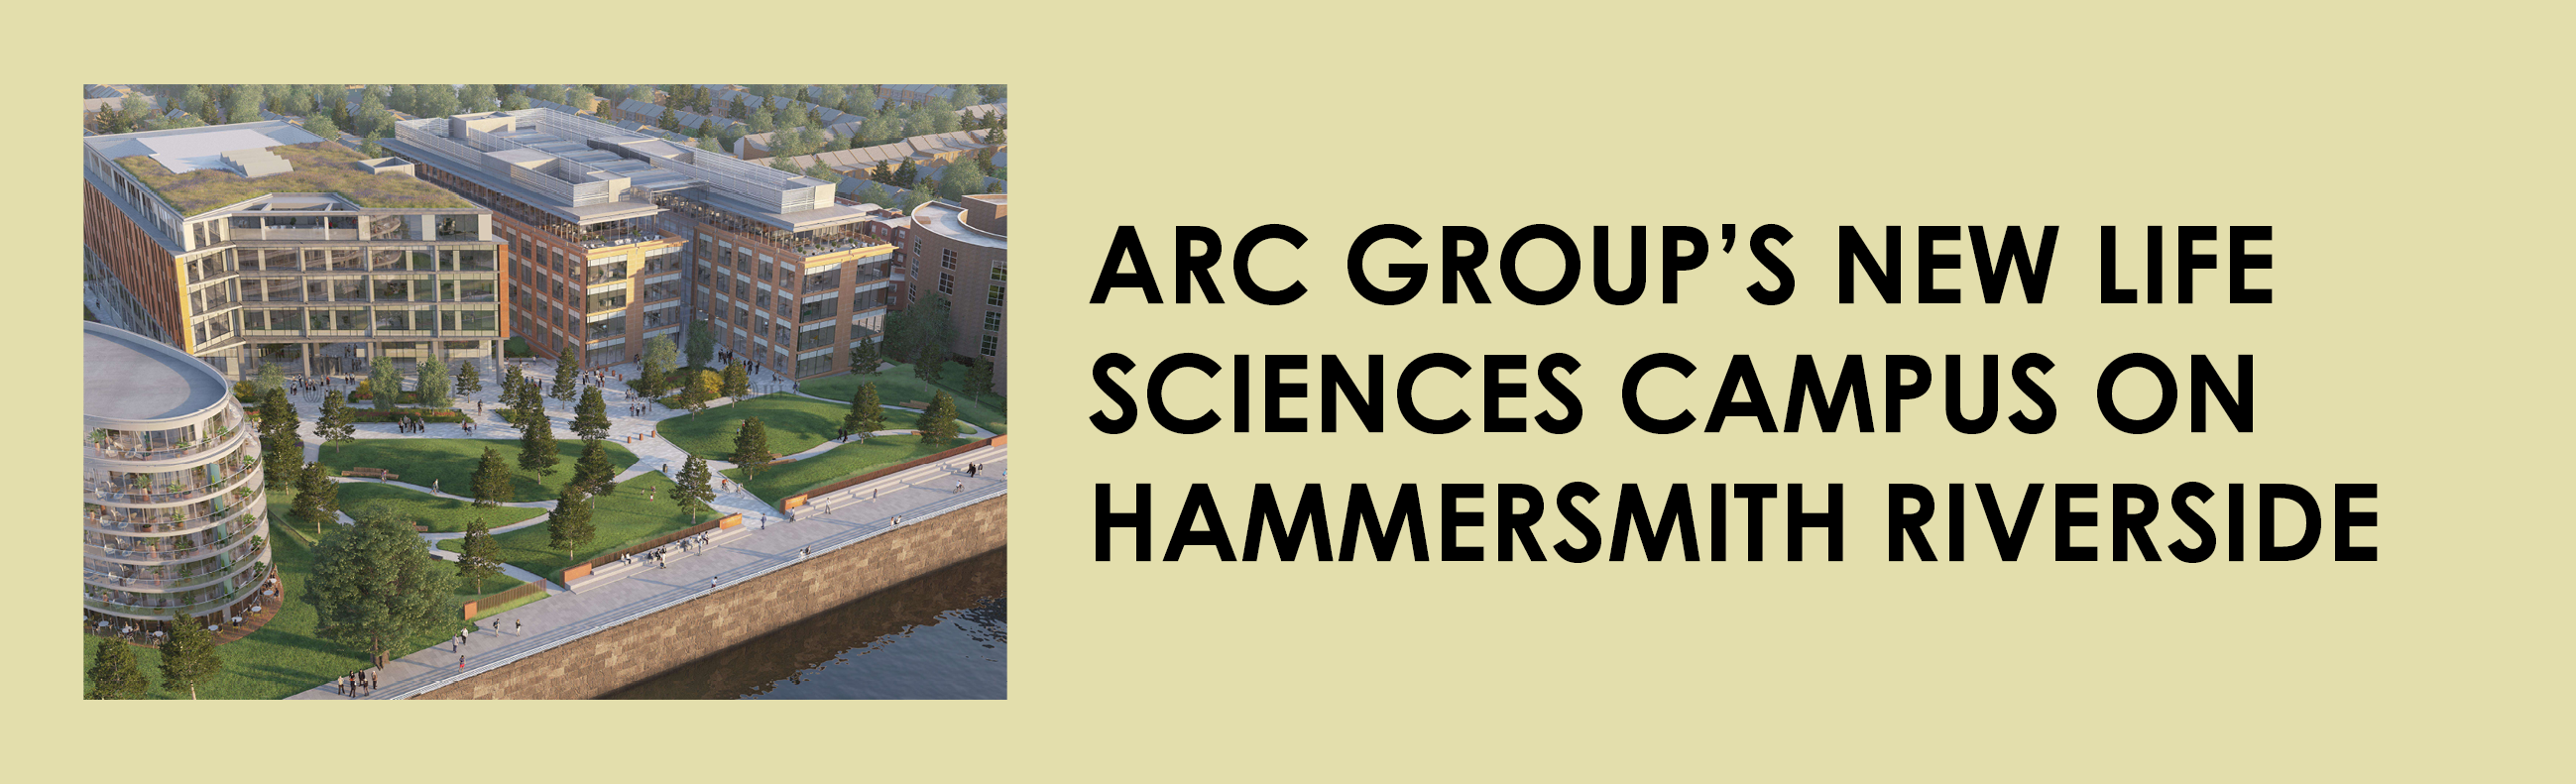 Arc group new life scienes campus, hammersmith